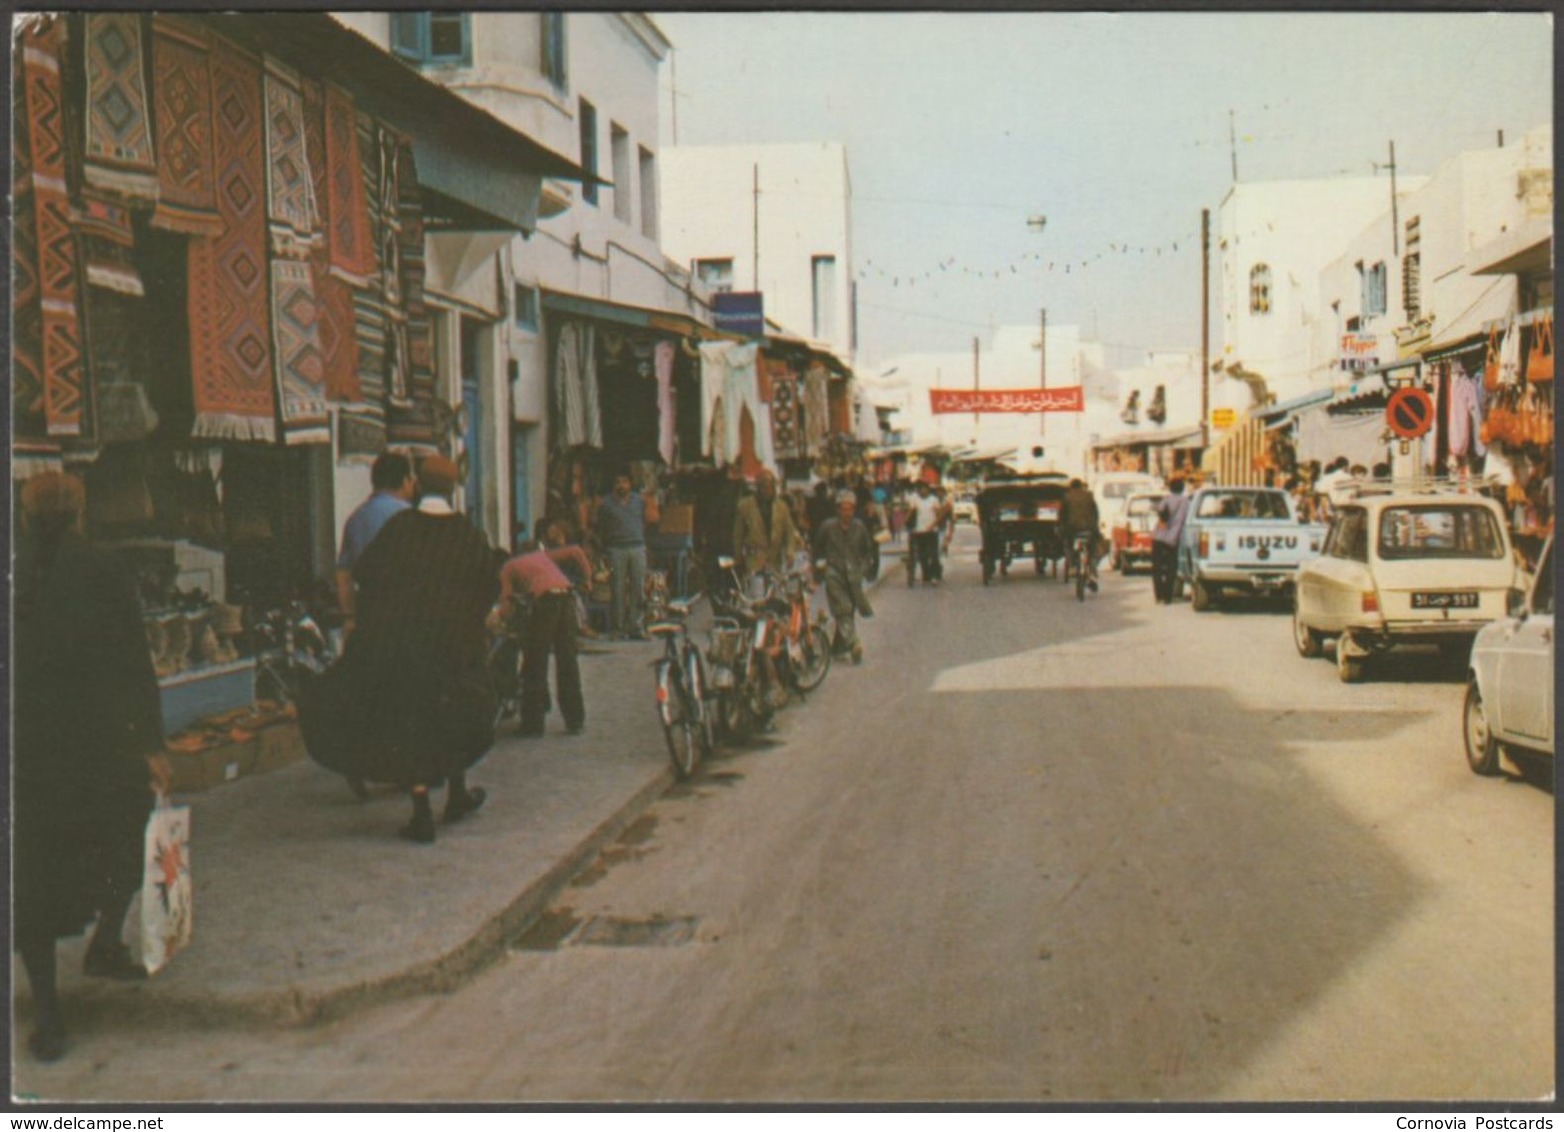 Centre Commerciale, Nabeul, C.1980s - Chamam CPM - Tunisia